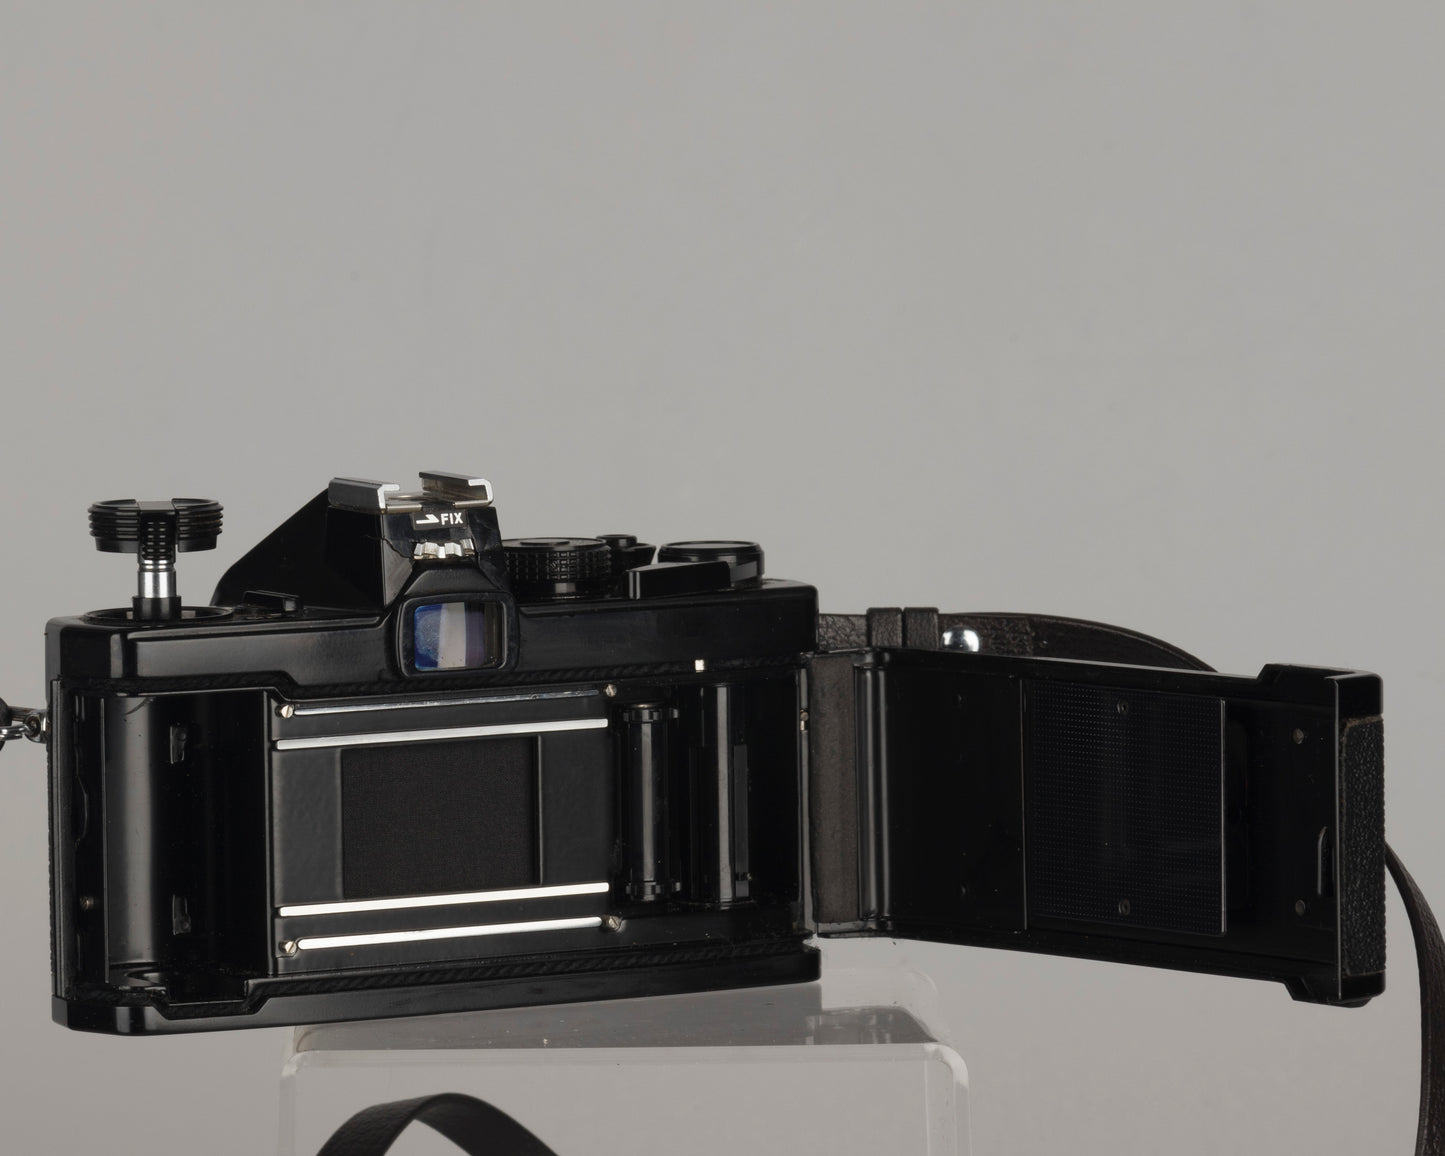 Olympus OM-1 35mm film SLR w/ Zuiko 50mm f1.8 lens and ever-ready case